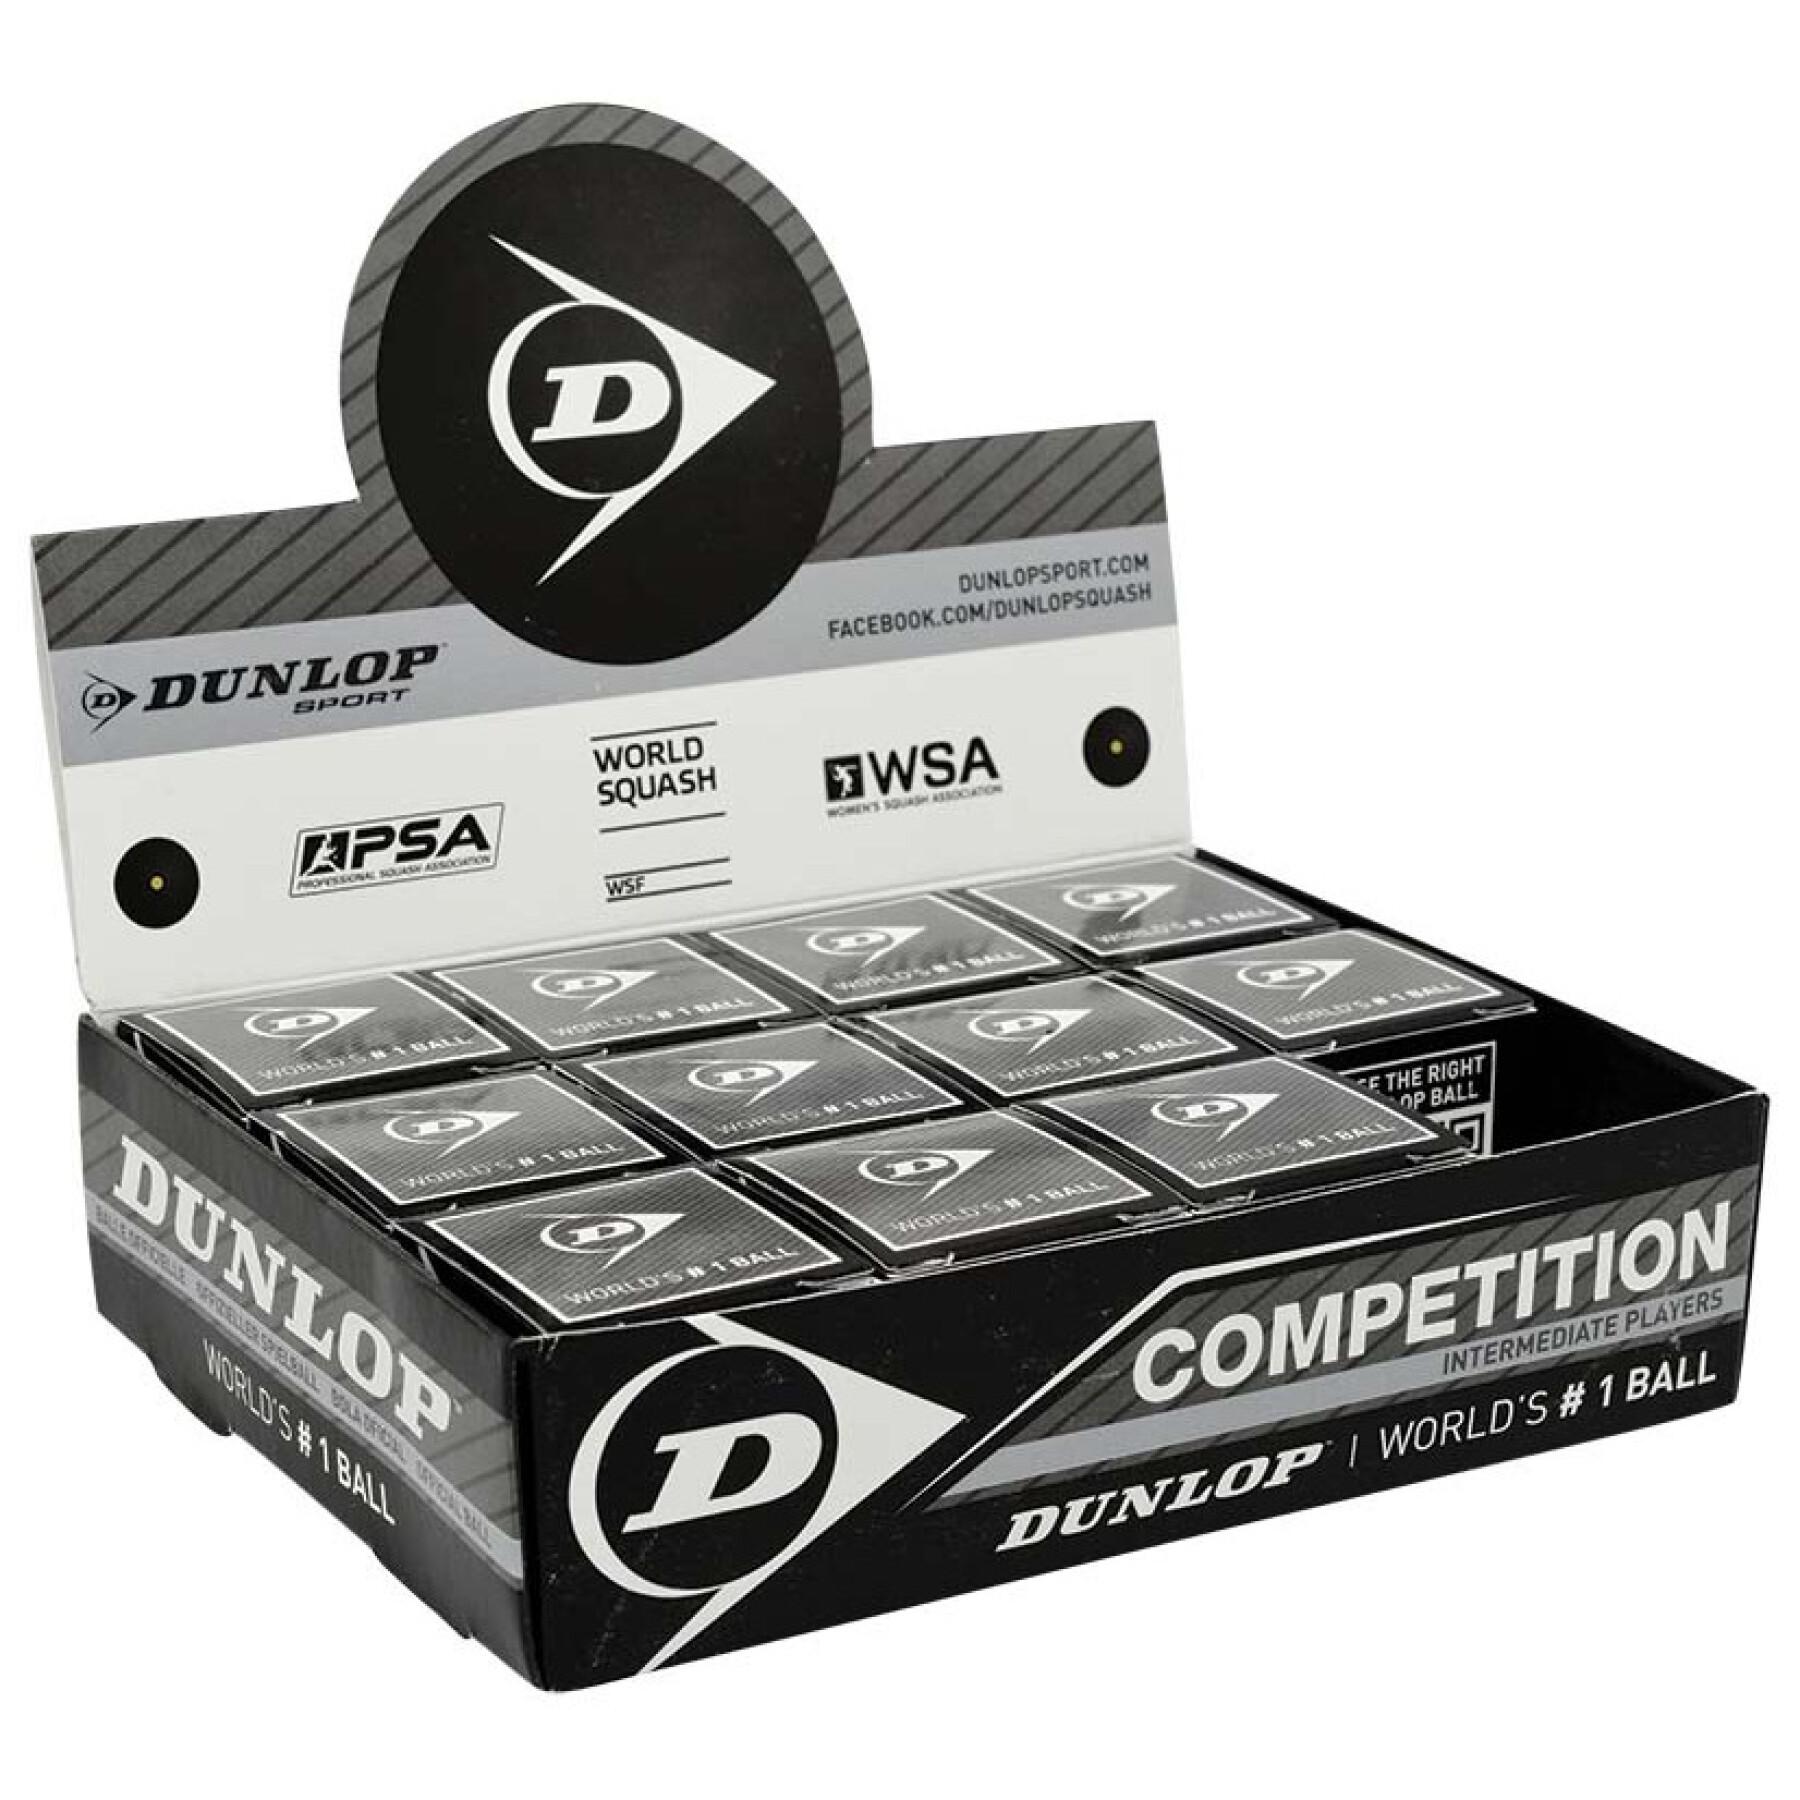 Set of 12 squash balls Dunlop competition